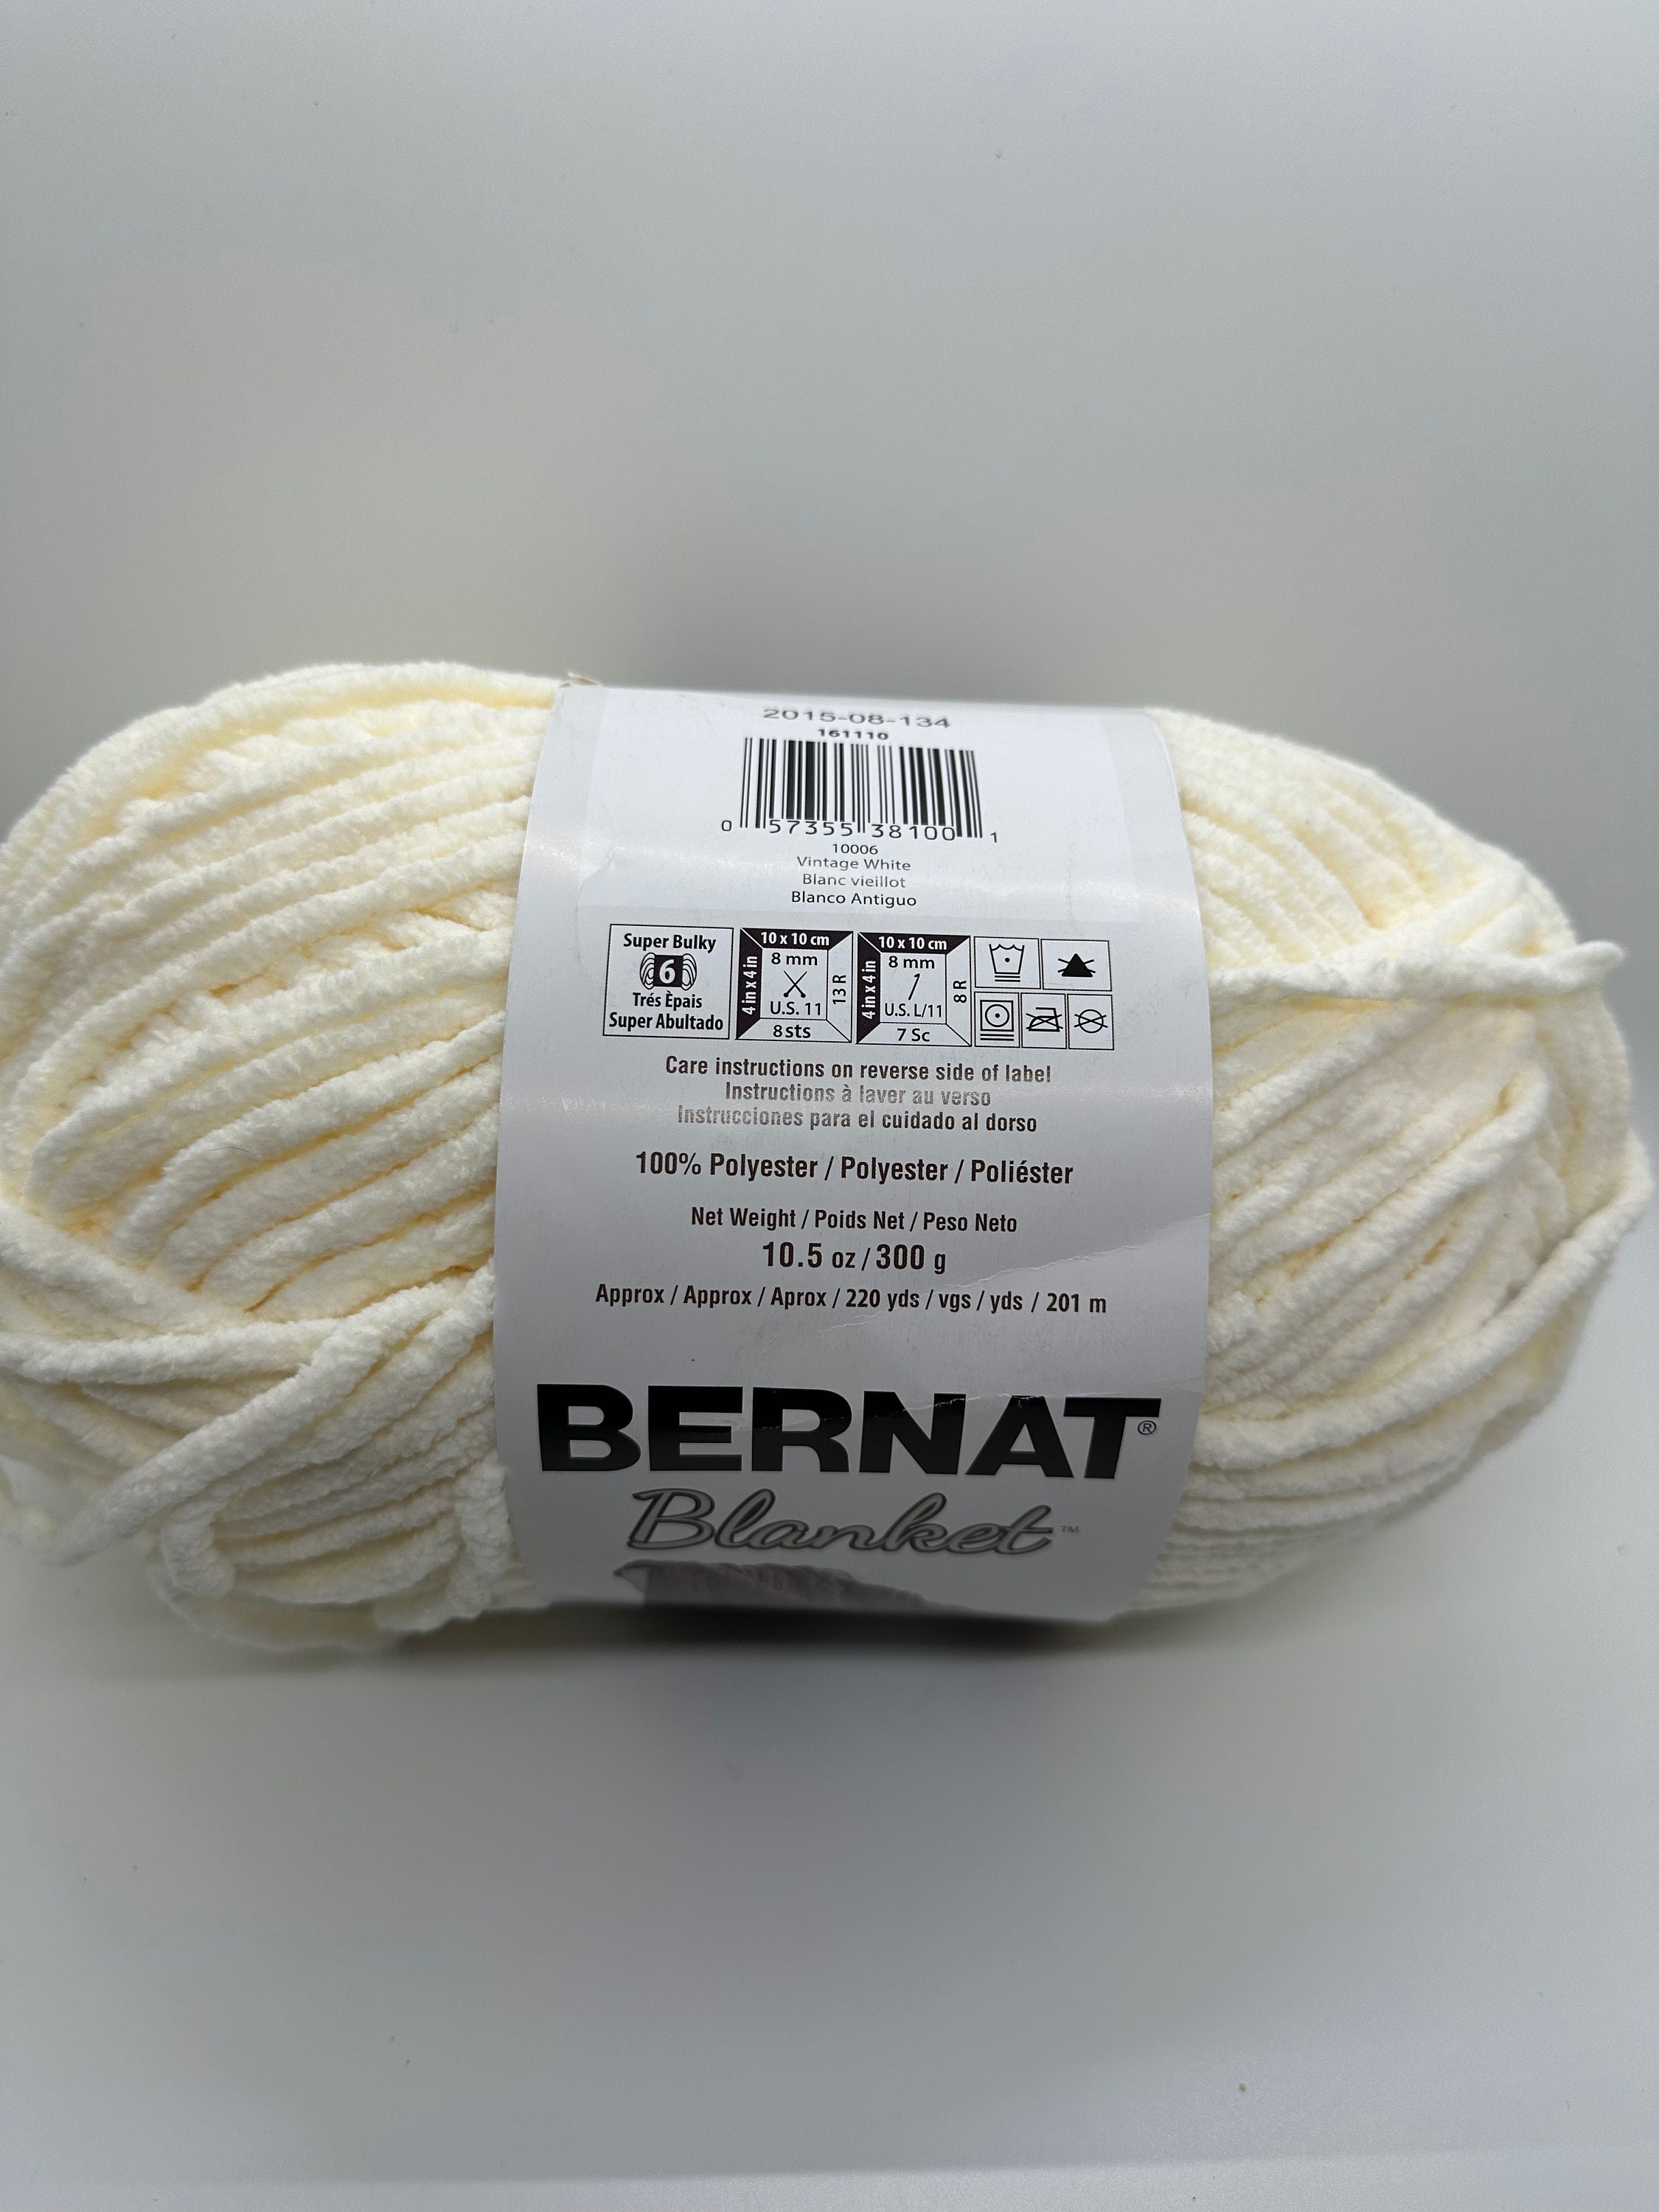 Bernat Blanket Yarn in Antique White Color, off White Blanket Yarn 